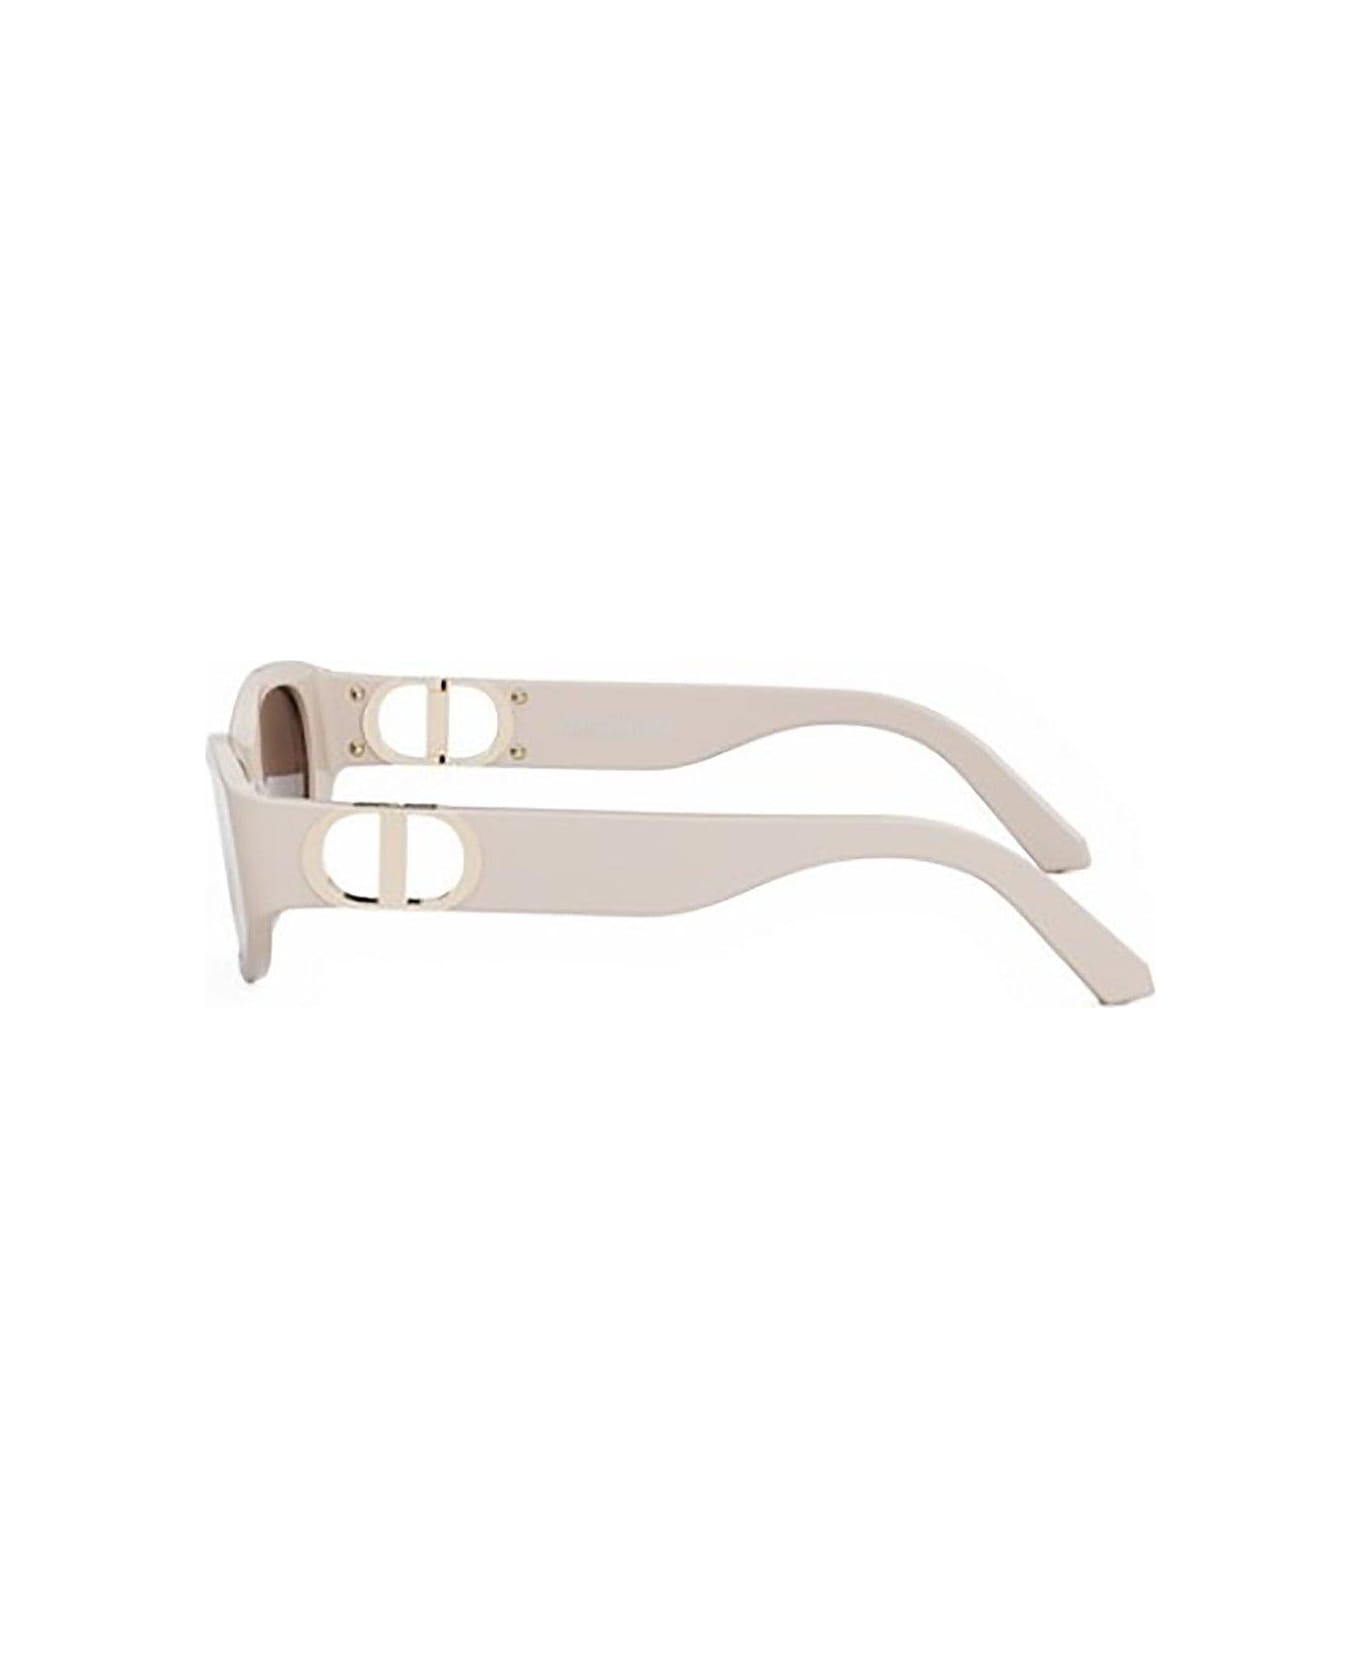 Dior Eyewear Rectangle Frame Sunglasses - 40f0 サングラス